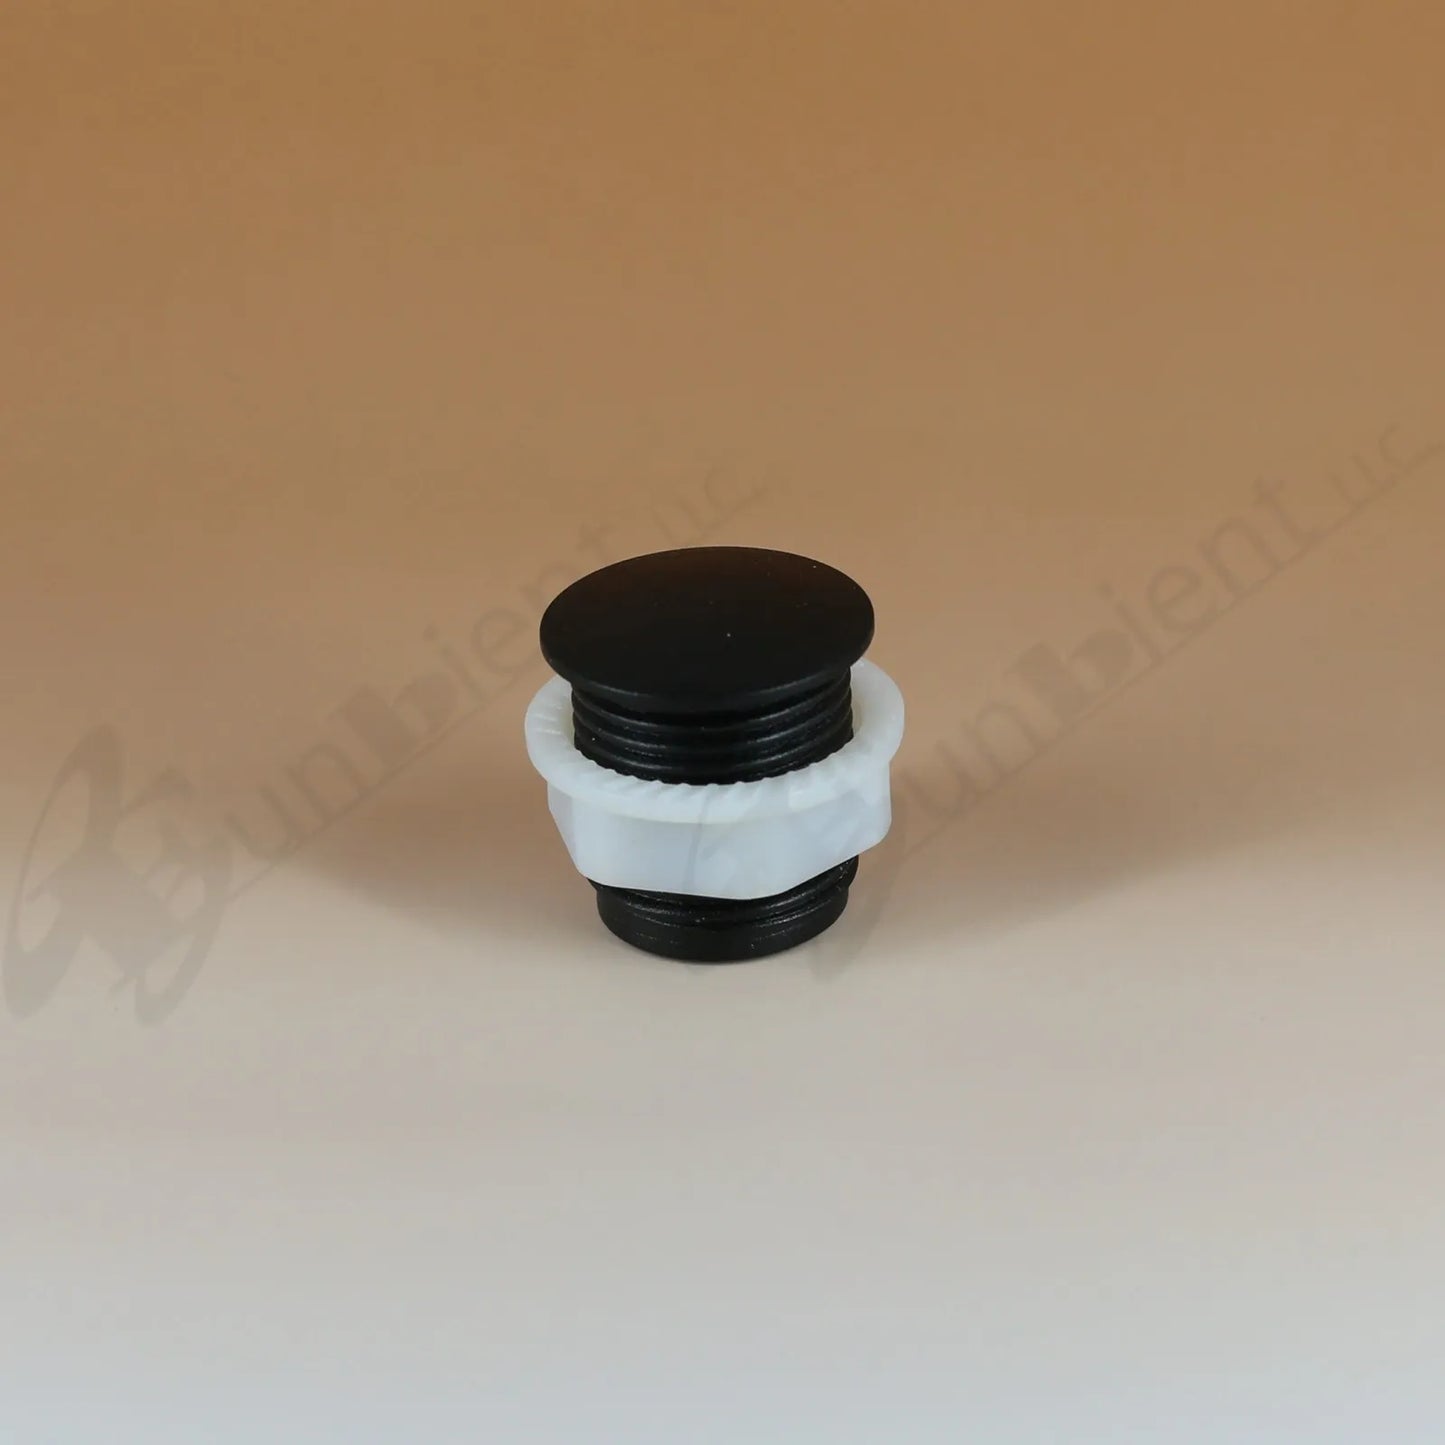 Sanwa Seimitsu Button Hole Cap Plug 24mm for Jamma Candy Cabinet OBSM screw type